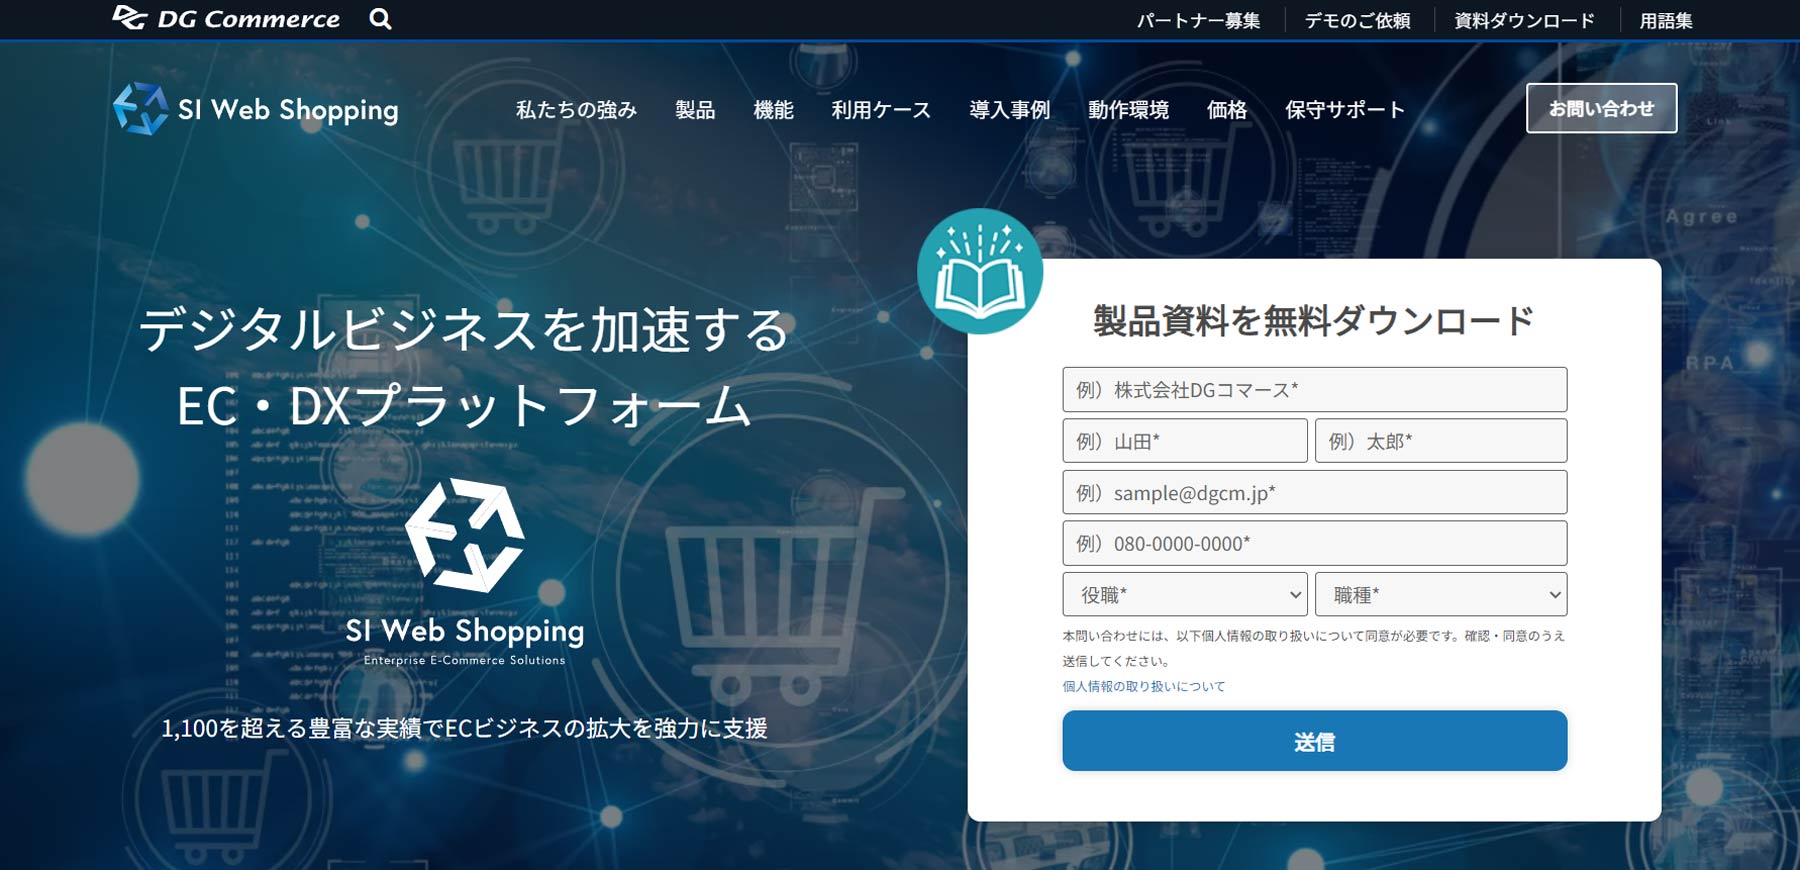 SI Web Shopping公式Webサイト